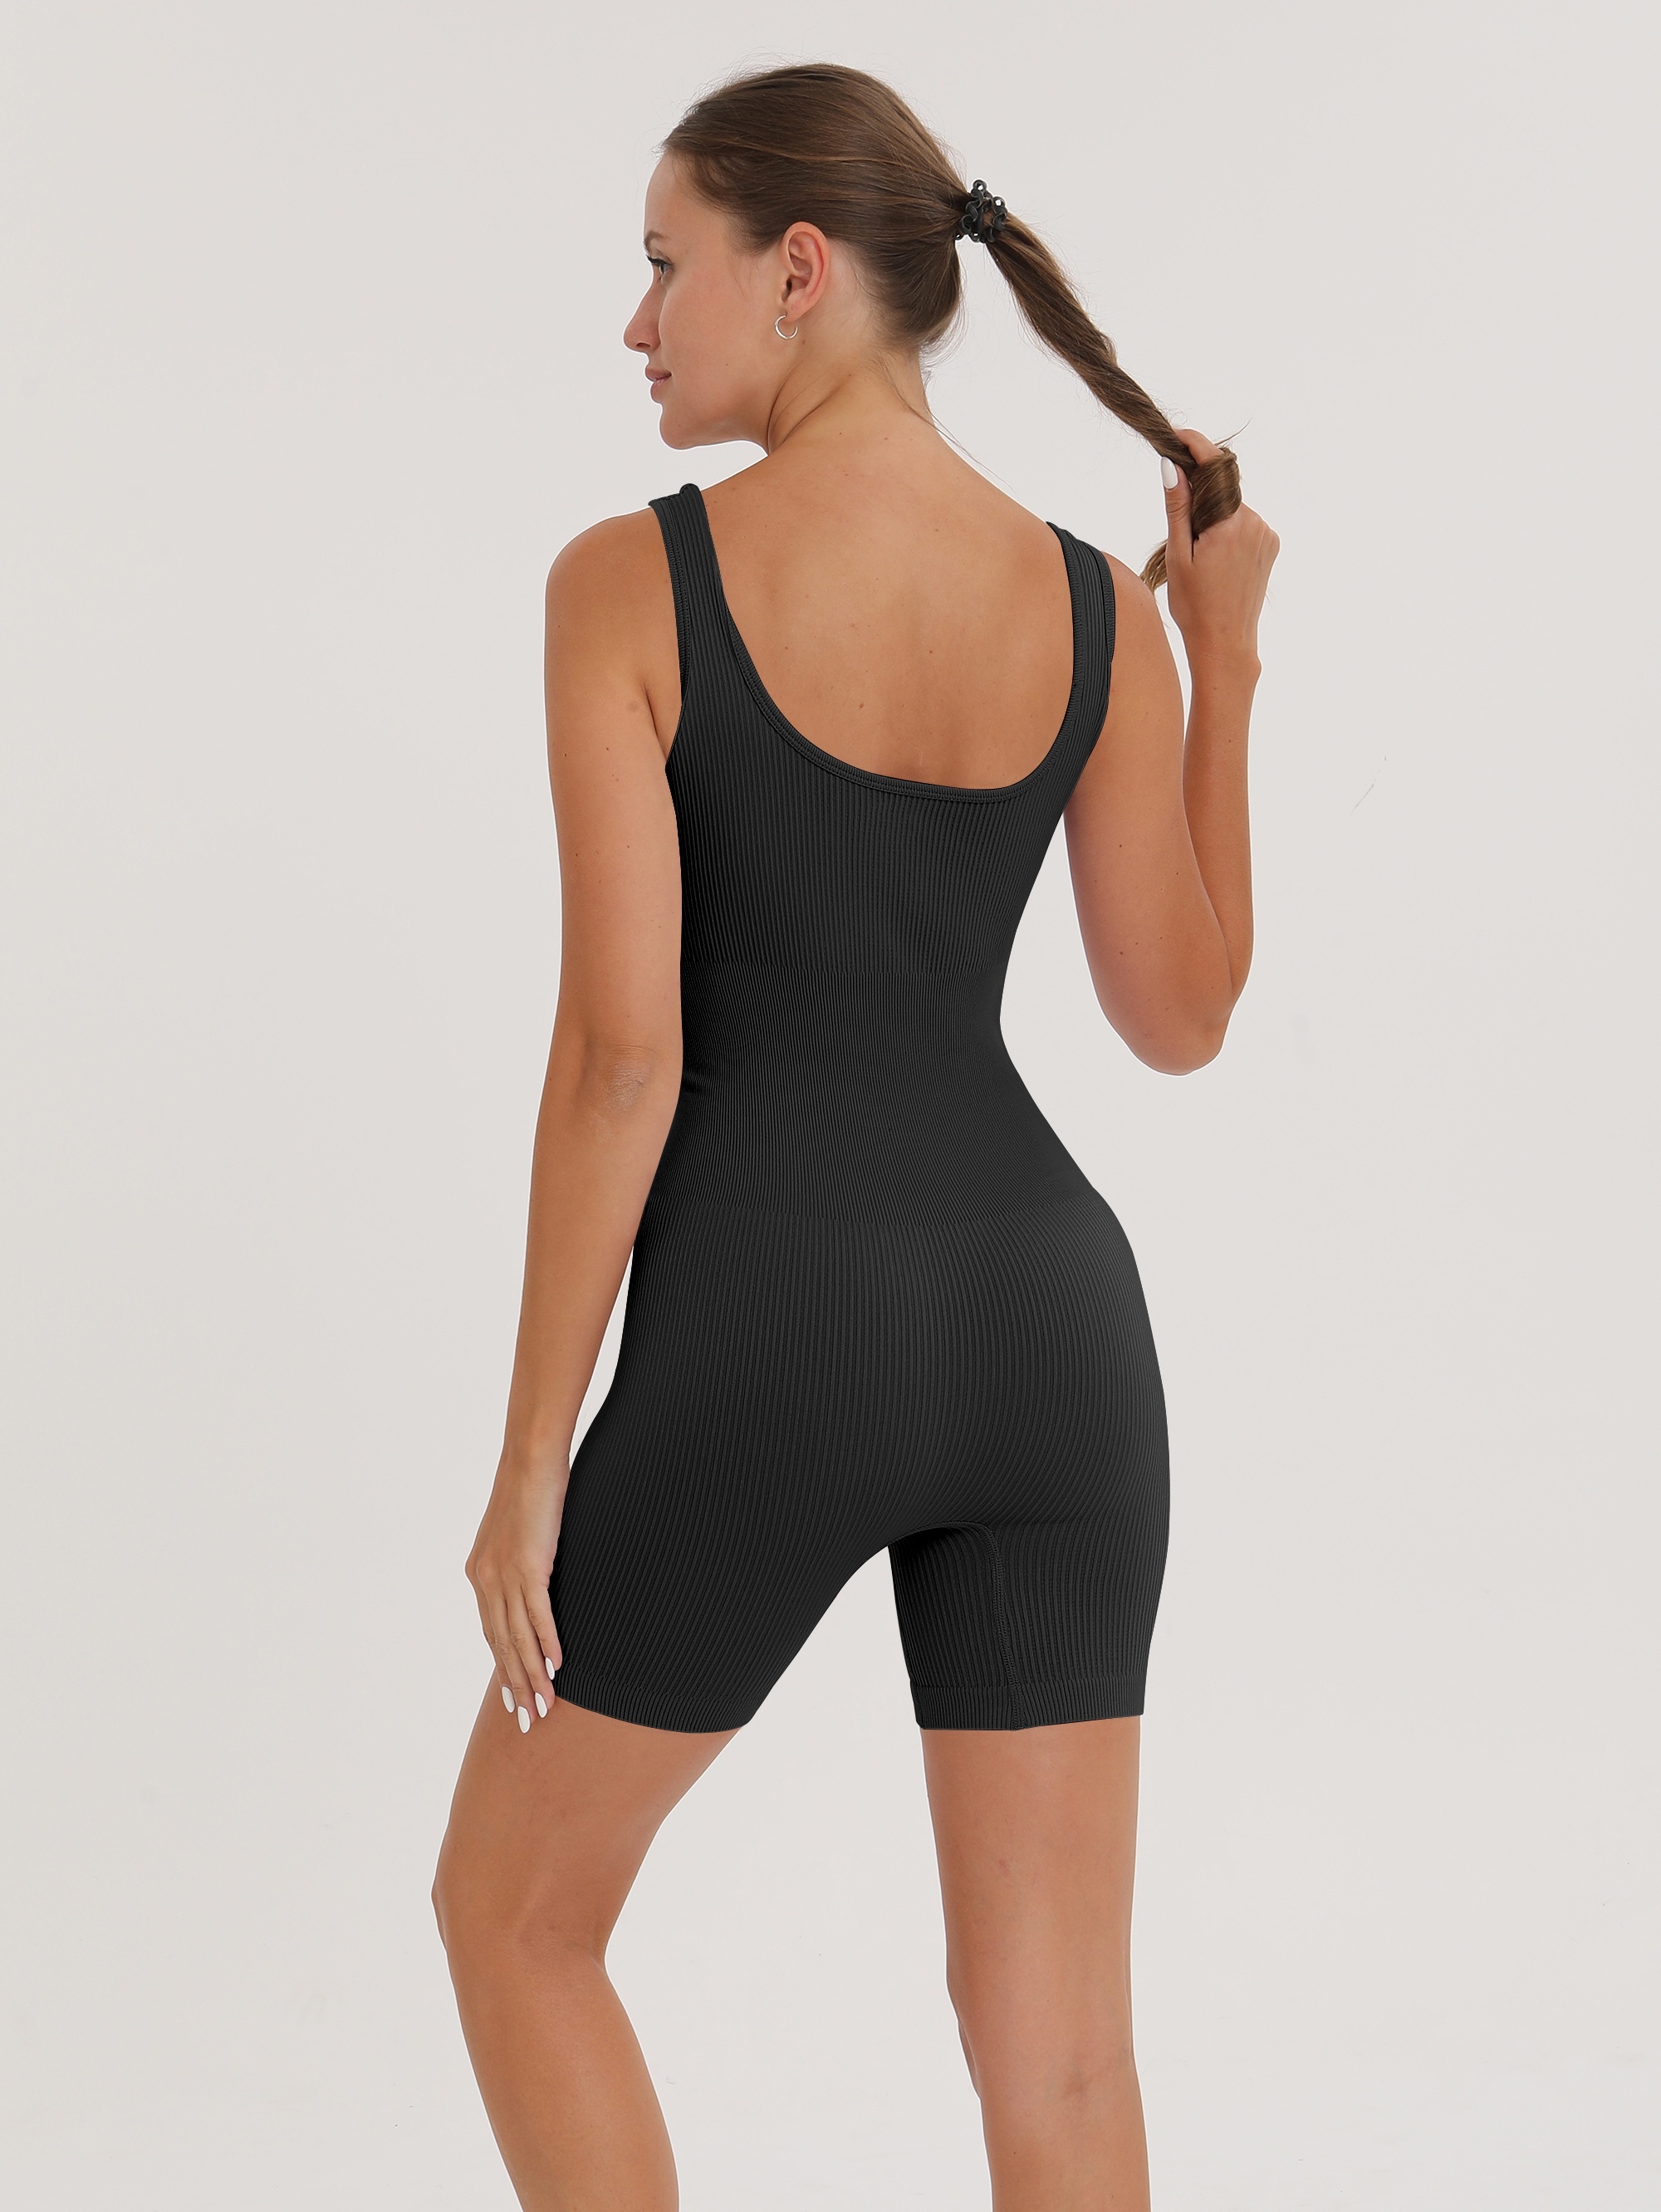  VINGOSTAR 3pcs Women's Bodysuit Yoga Workout Romper